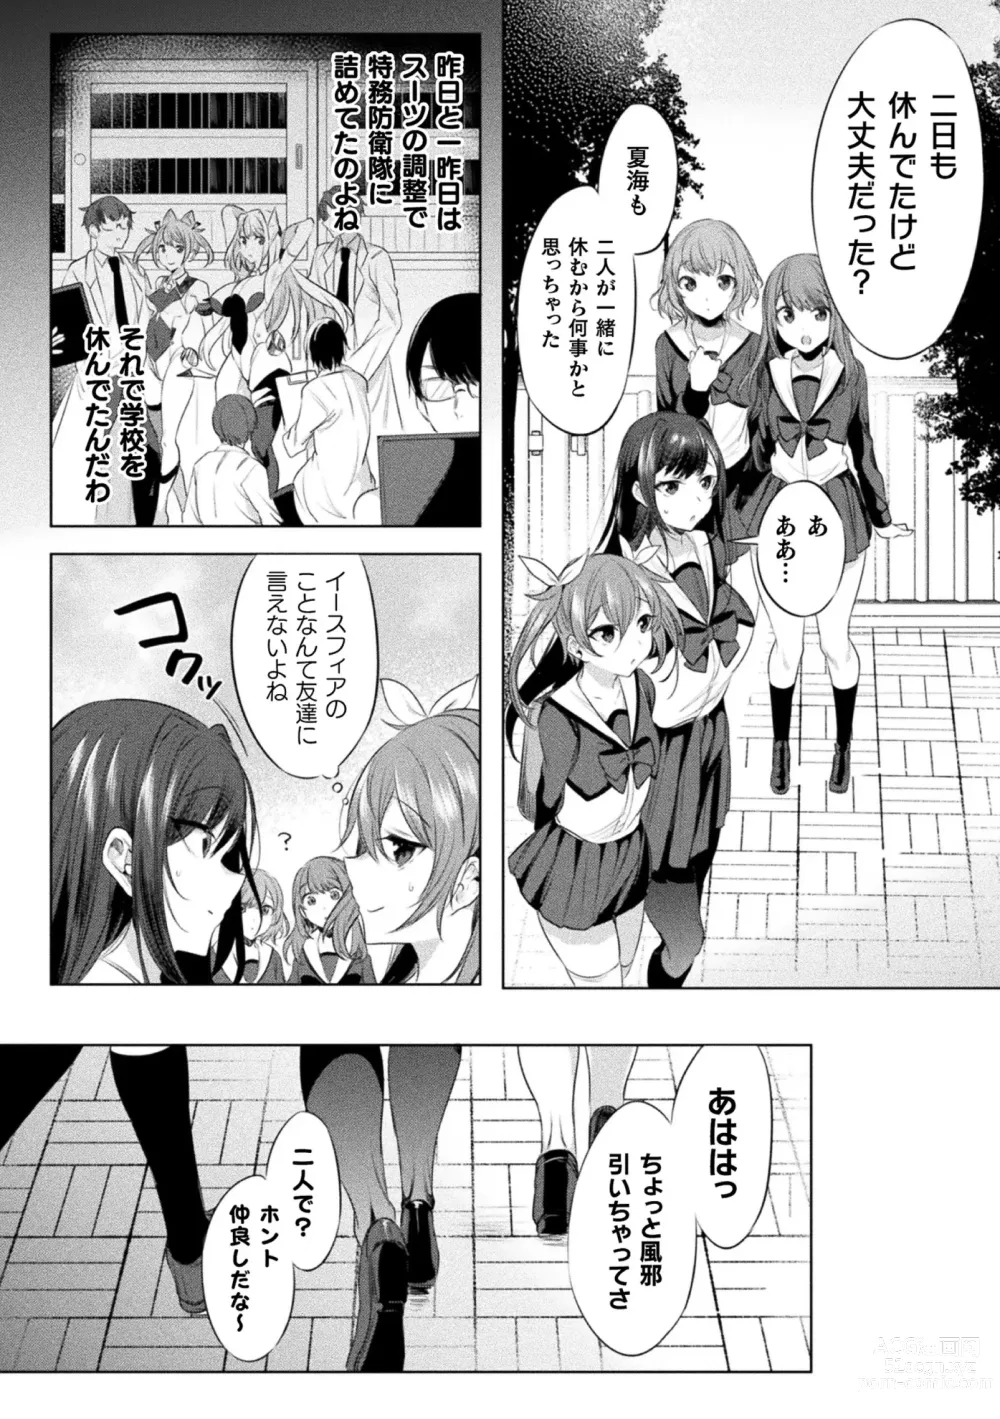 Page 134 of manga Kukkoro Heroines Vol. 27